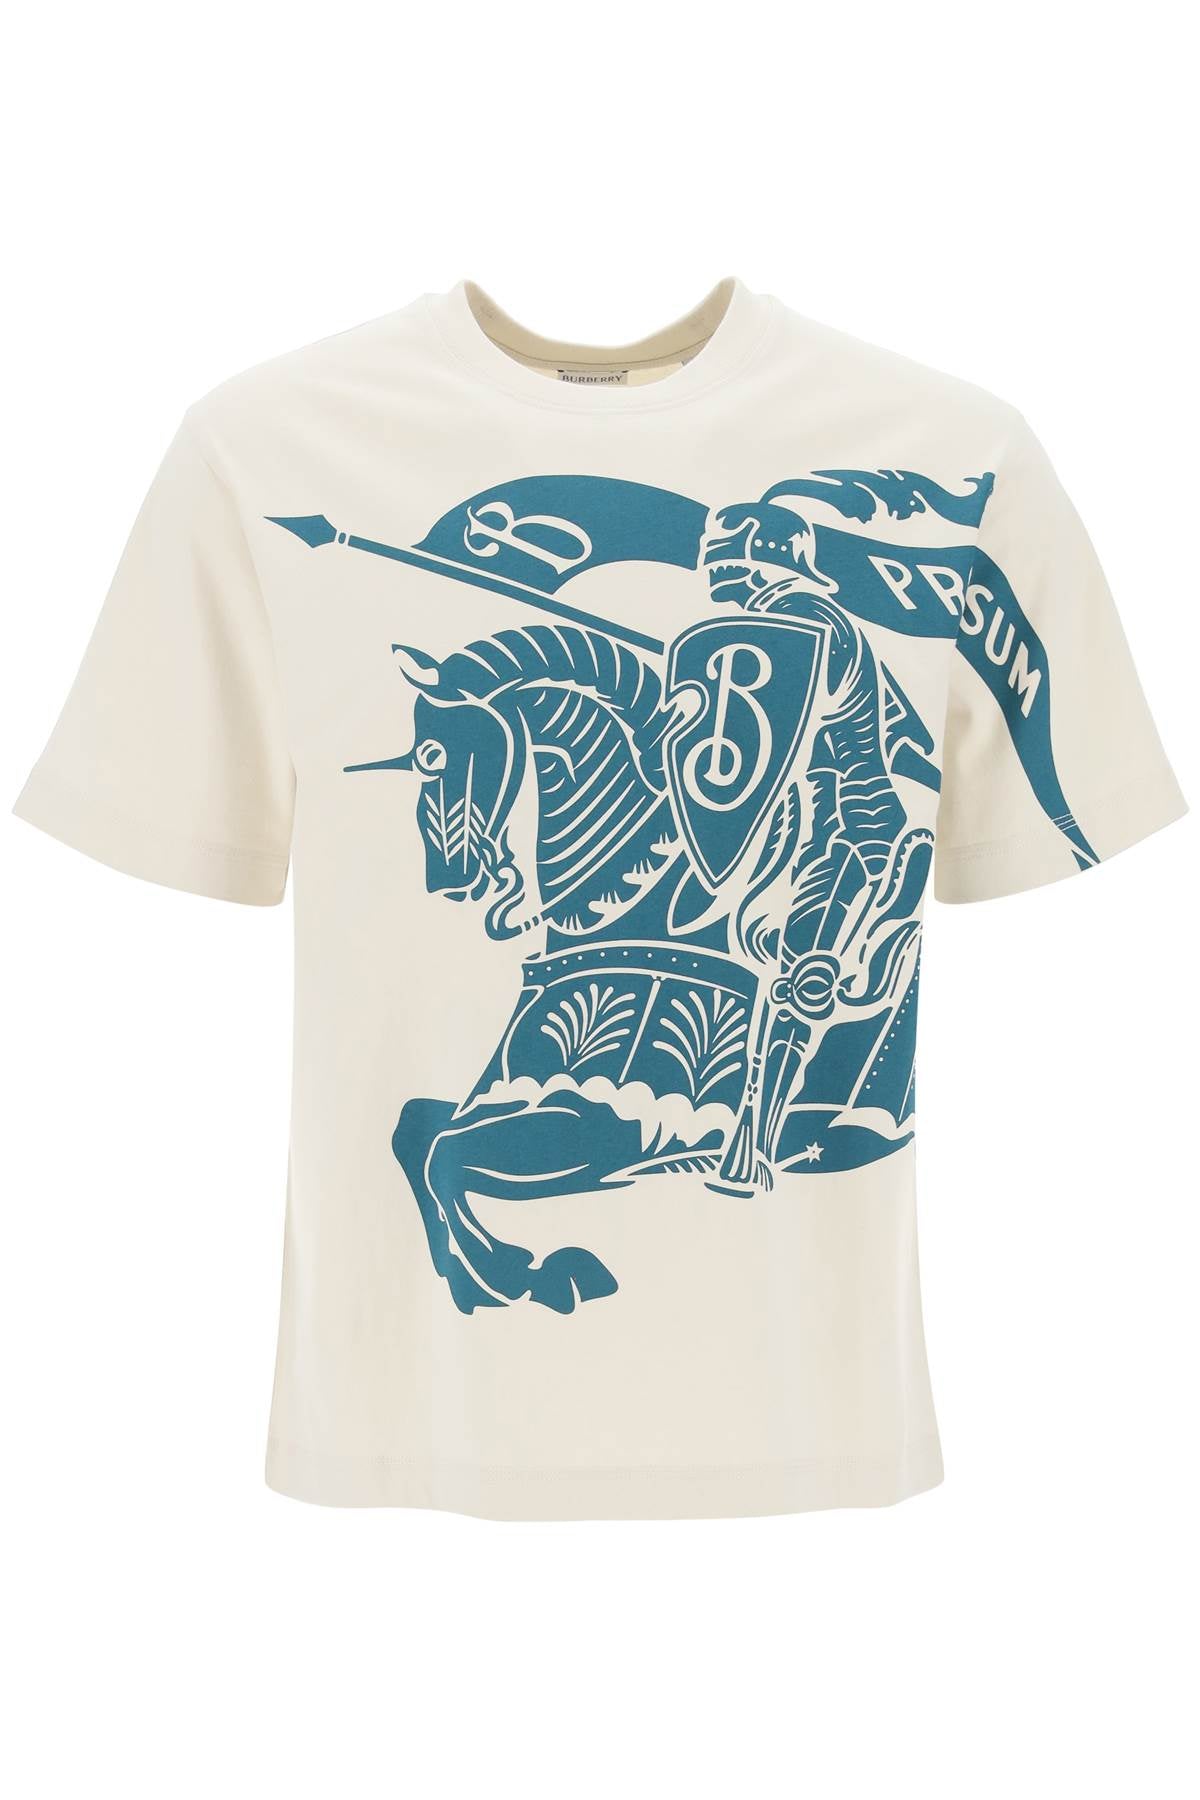 BURBERRY Cream and Light Blue Equestrian Knight Print T-Shirt for Men